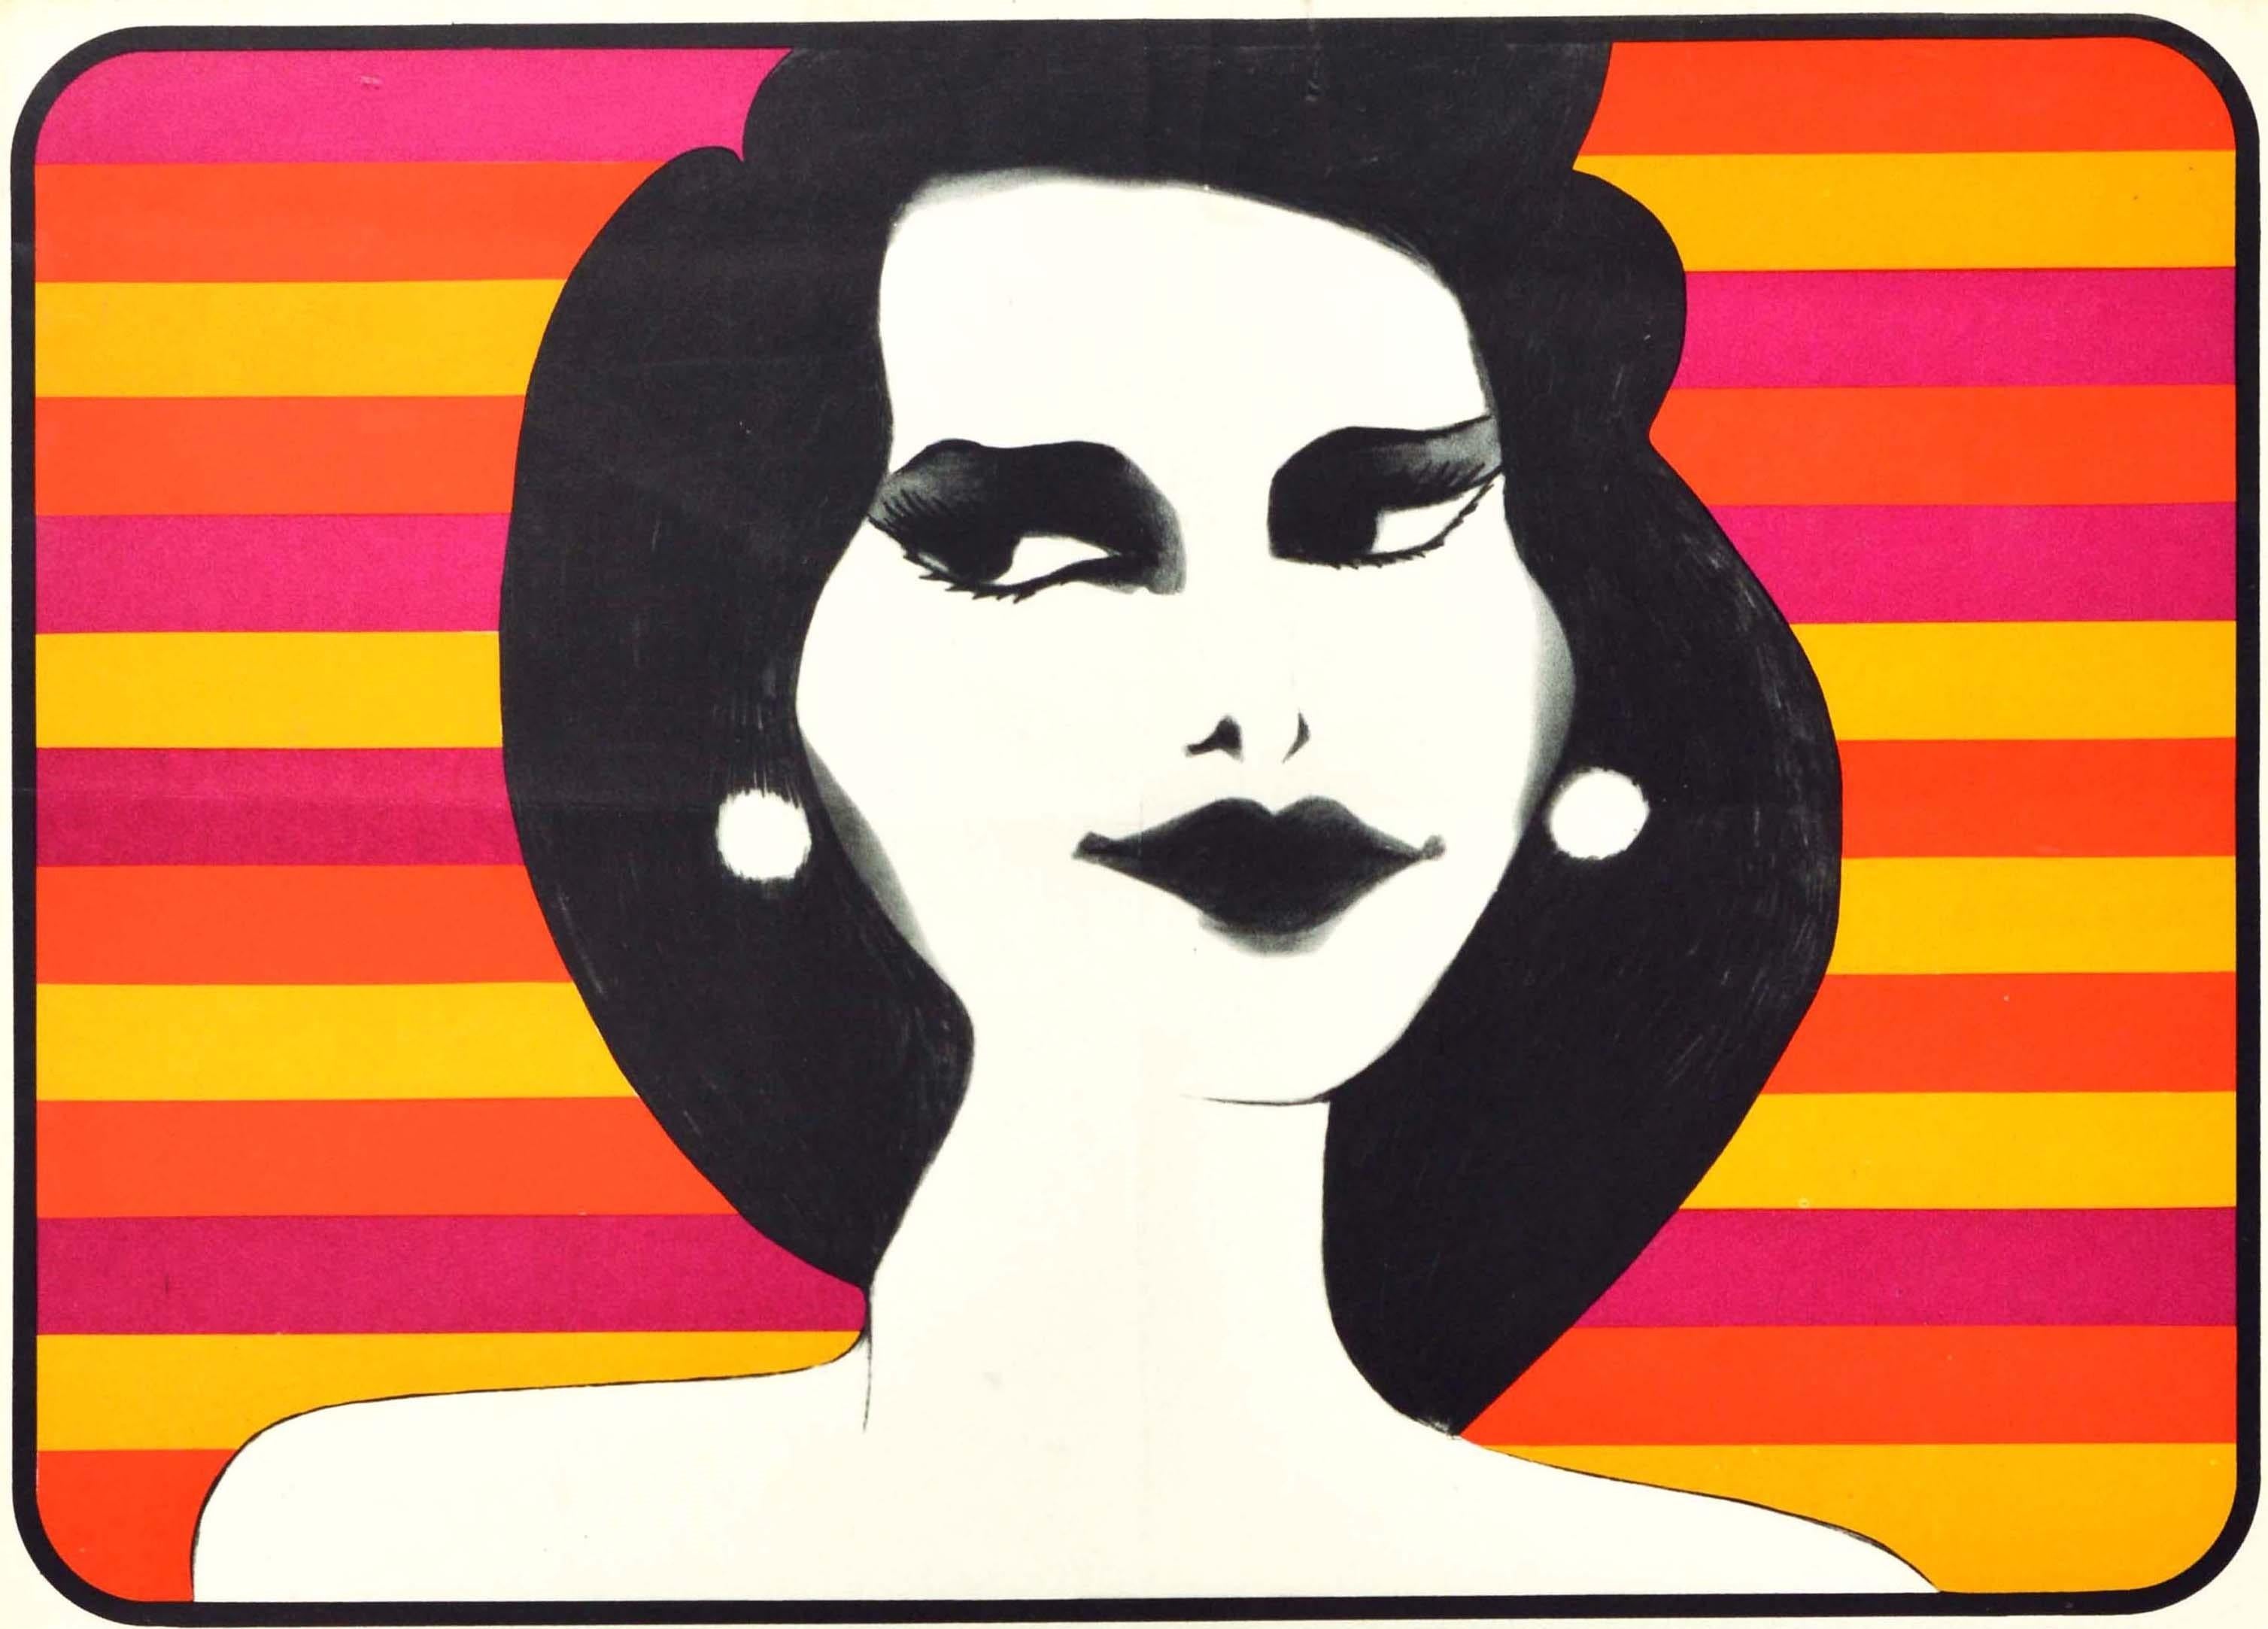 Original Vintage Film Poster Too Bad She's Bad Sophia Loren Marcello Mastroianni - Print by Unknown